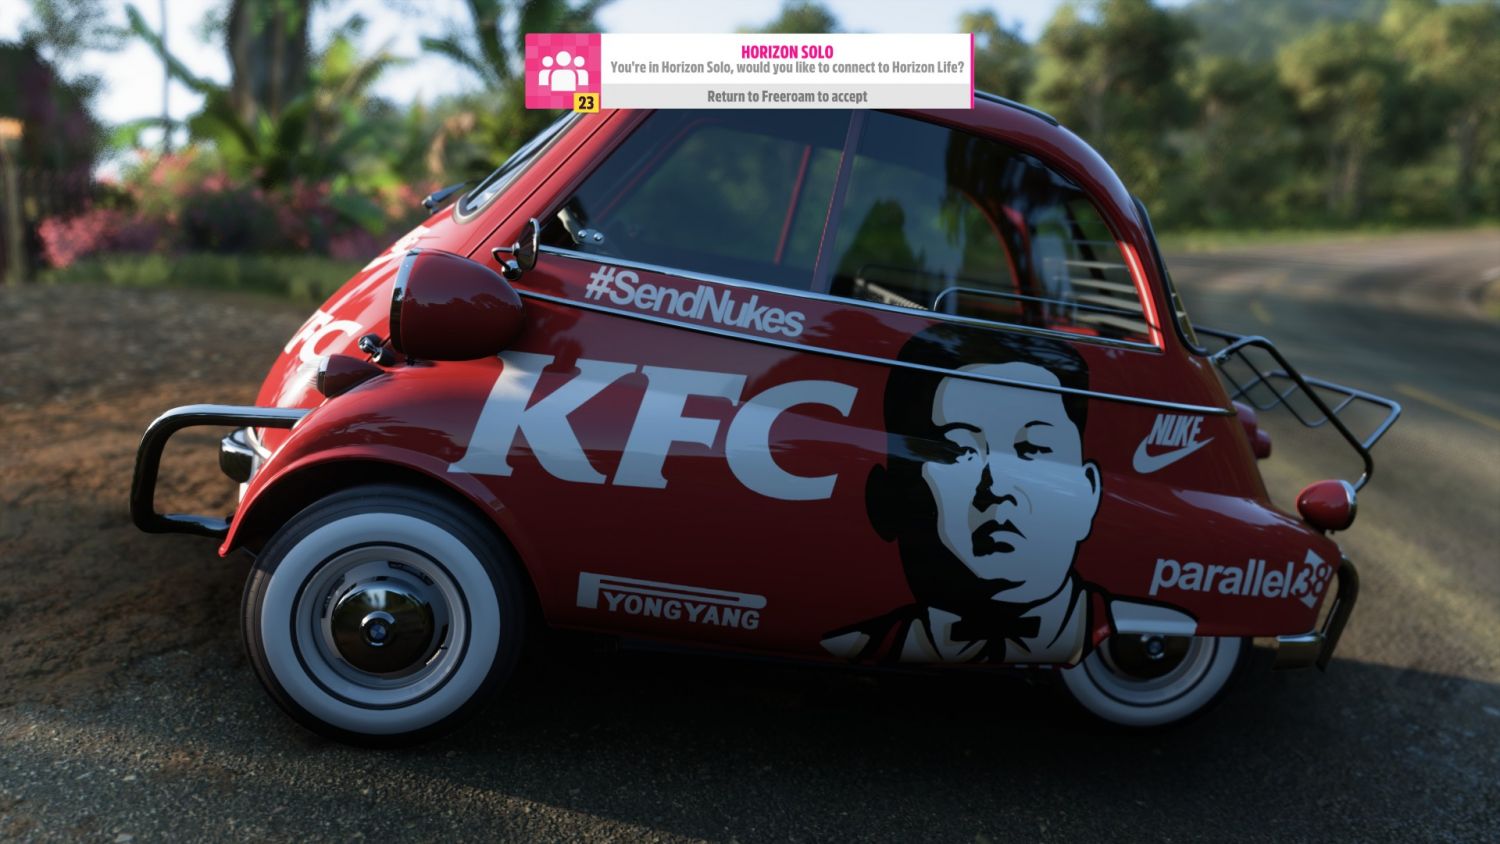 The Kim Jung-un KFC car design in question for the Forza Horizon 5 ban.